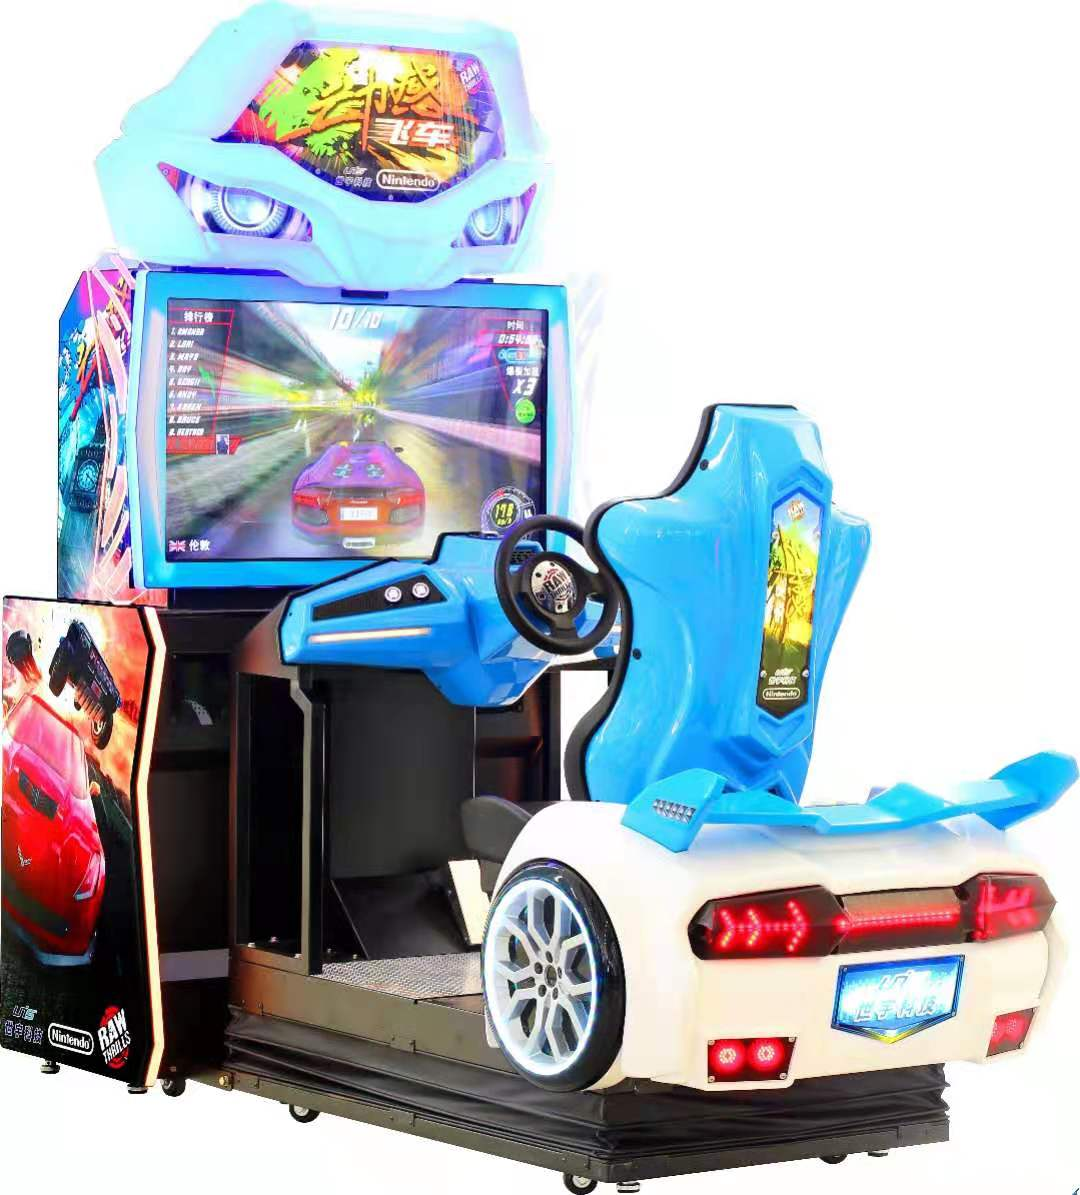 42 LCD dynamic Racing ll Simulator racing arcade game machine